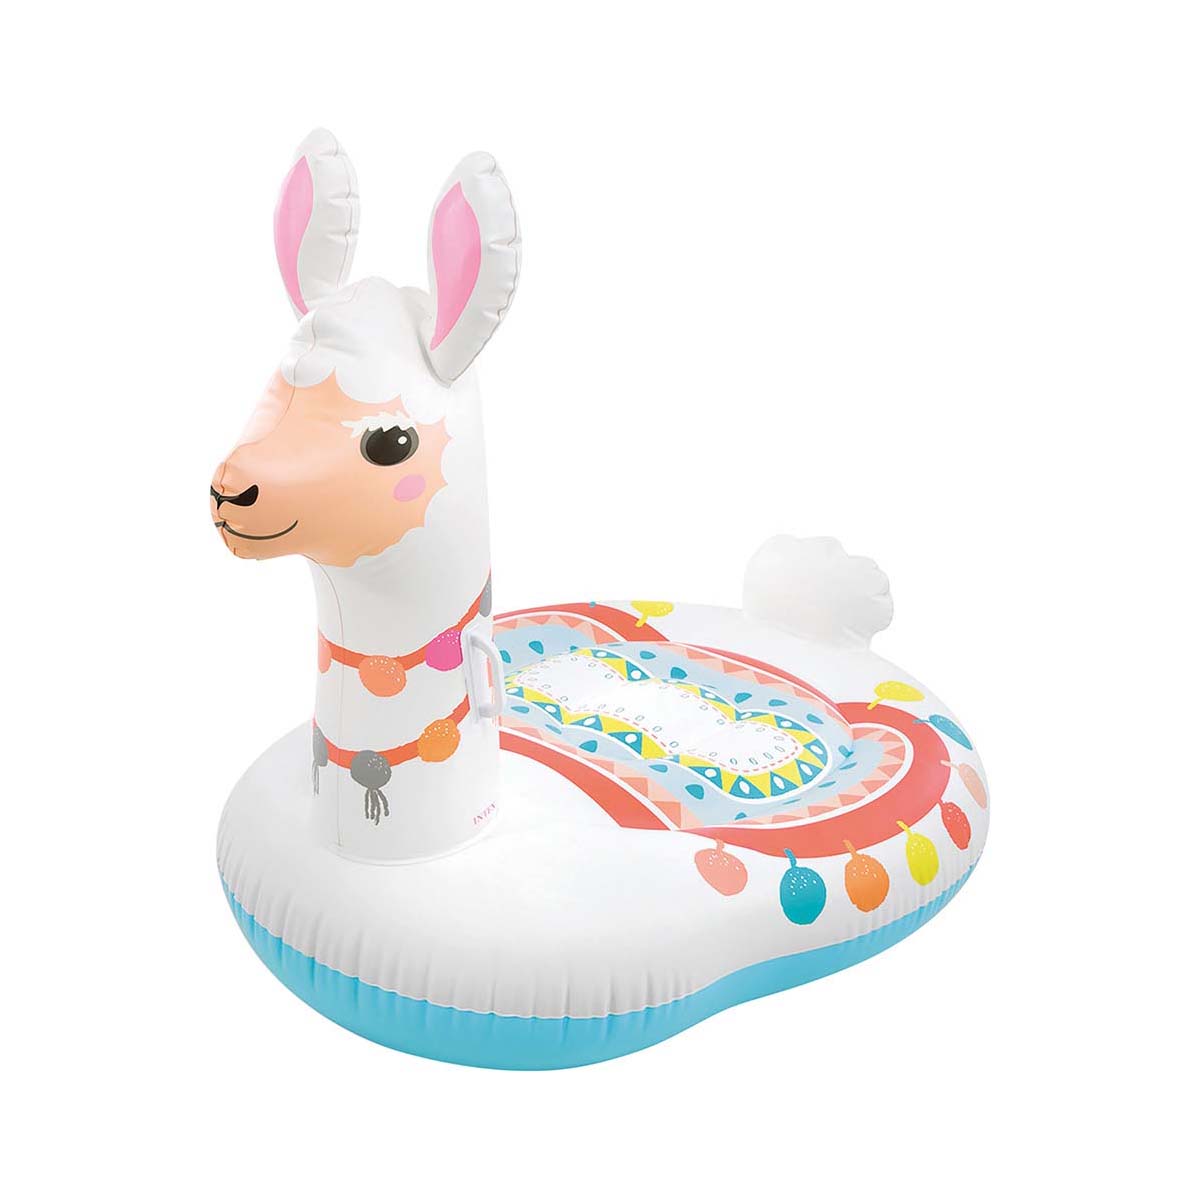 Intex Inflatable Ride On Cute Llama